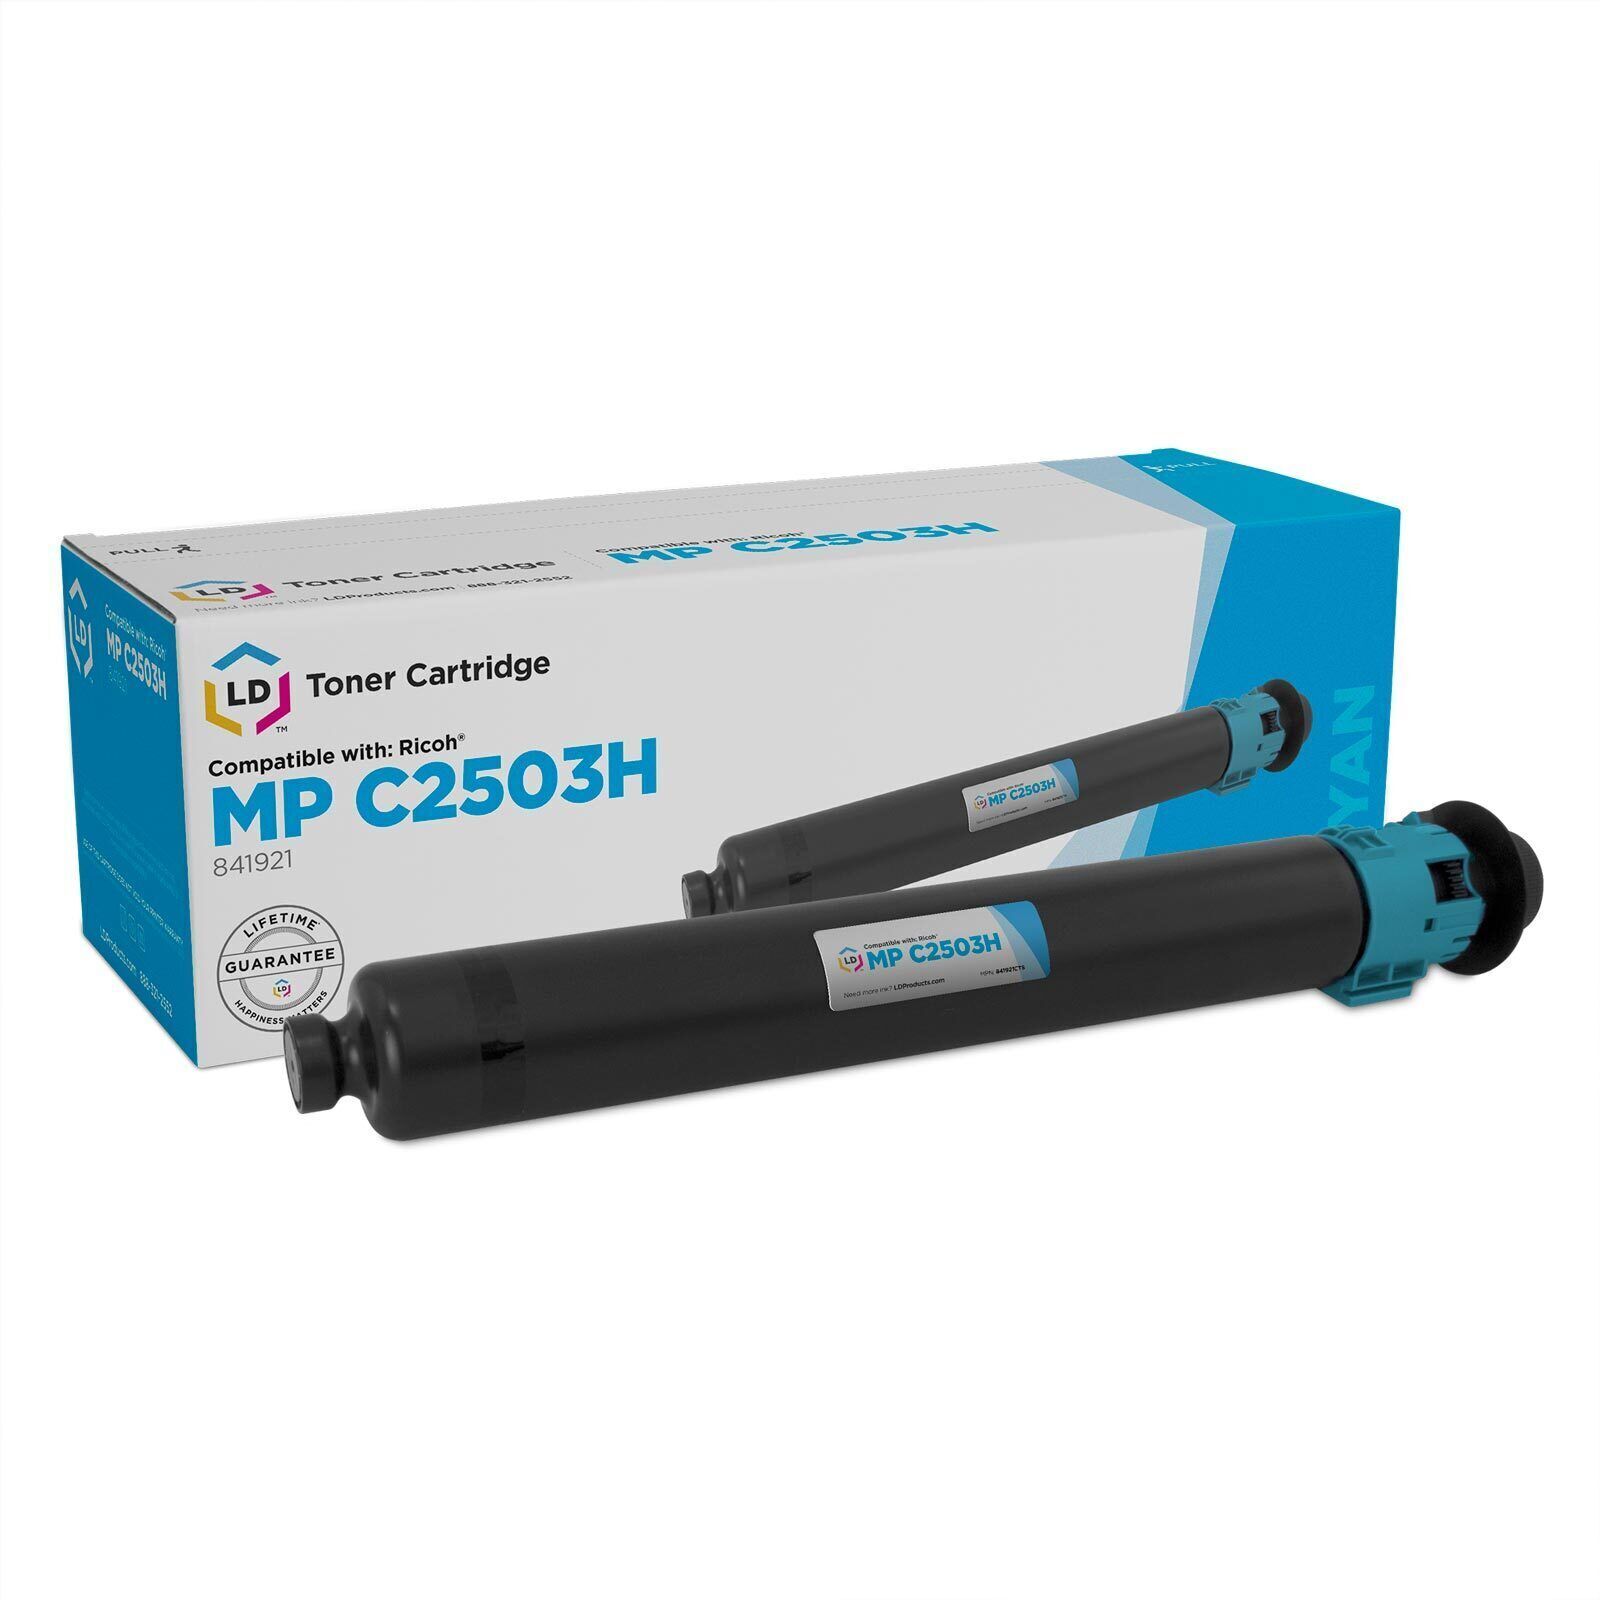 LD 841921 MP C2503H Cyan Laser Toner Cartridge for Ricoh Printer